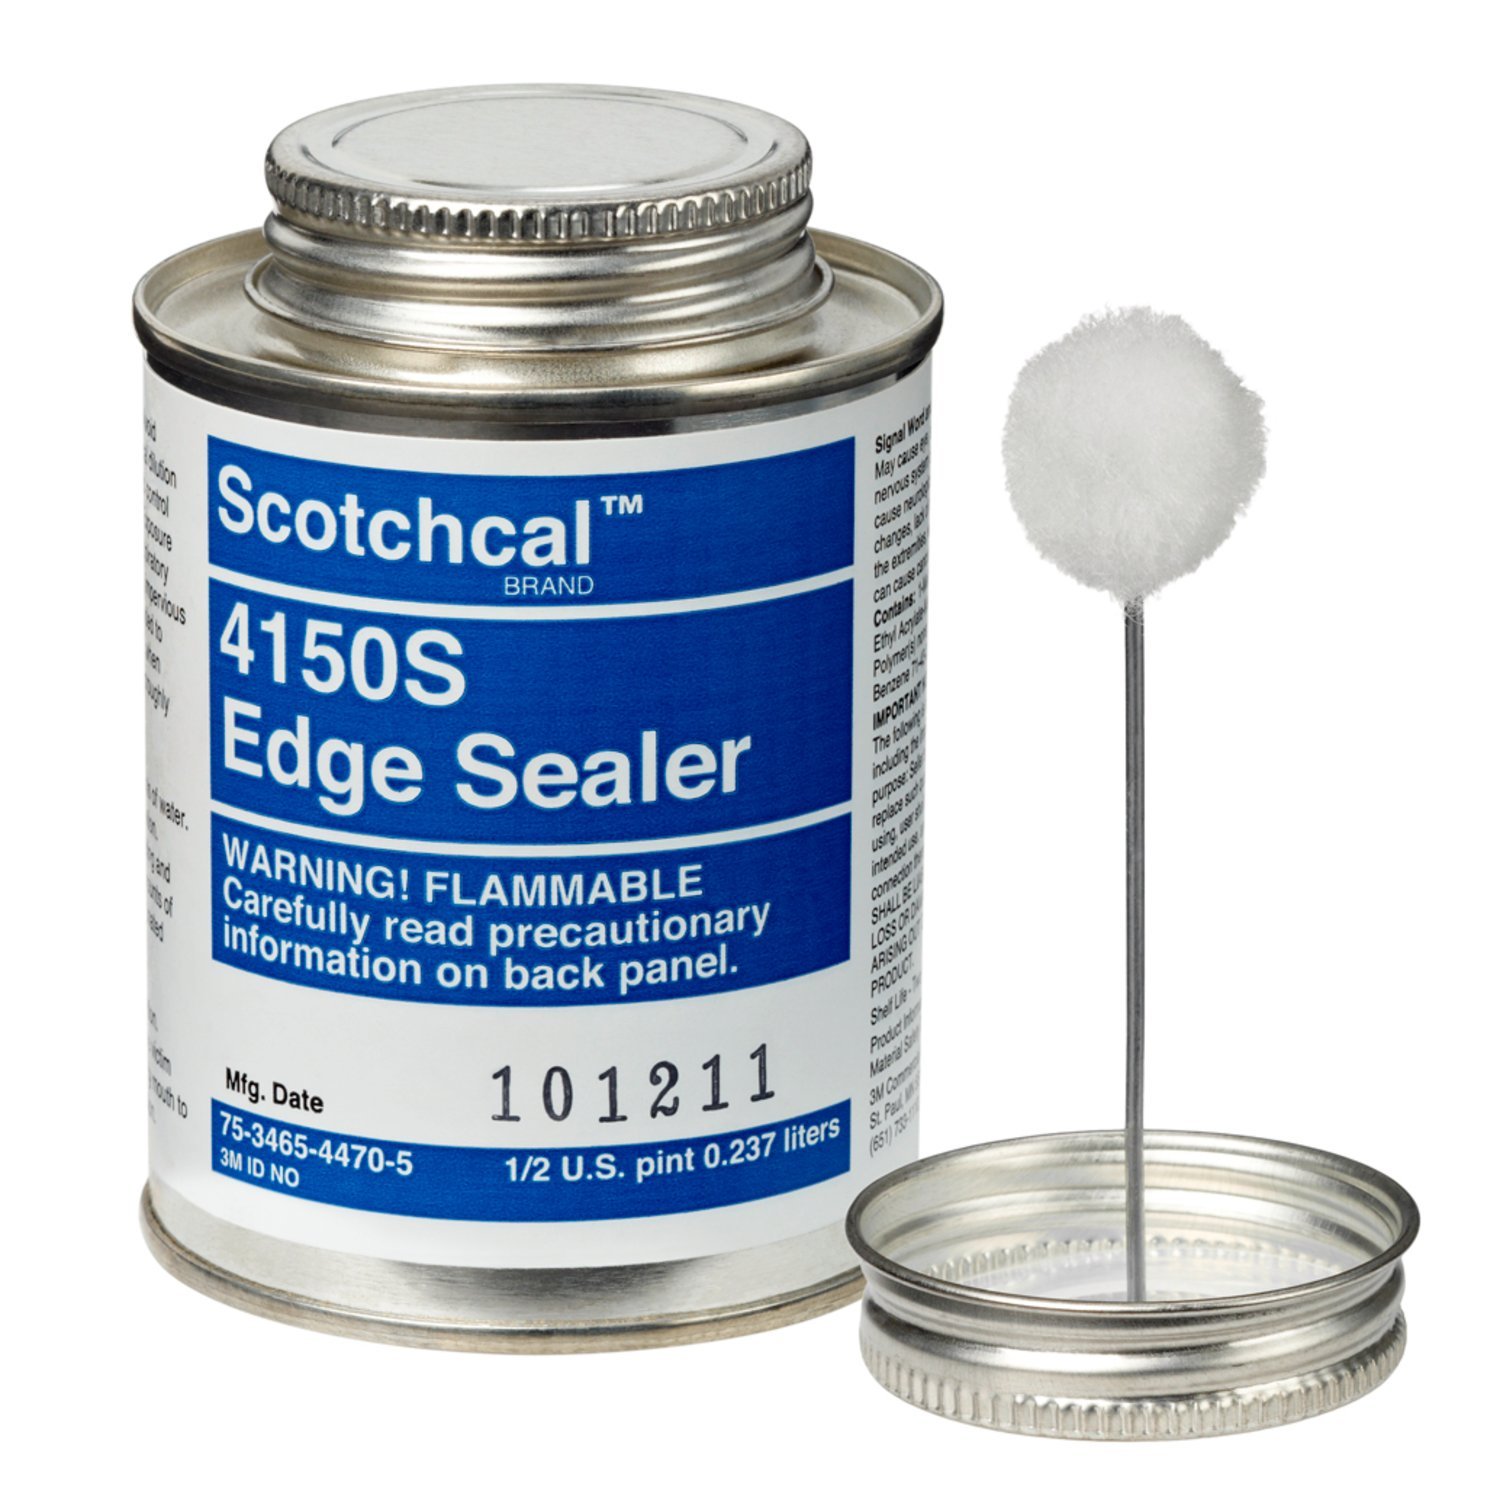 7000005083 - 3M Edge Sealer 4150S, 8 oz Dauber Cans, 12/Carton